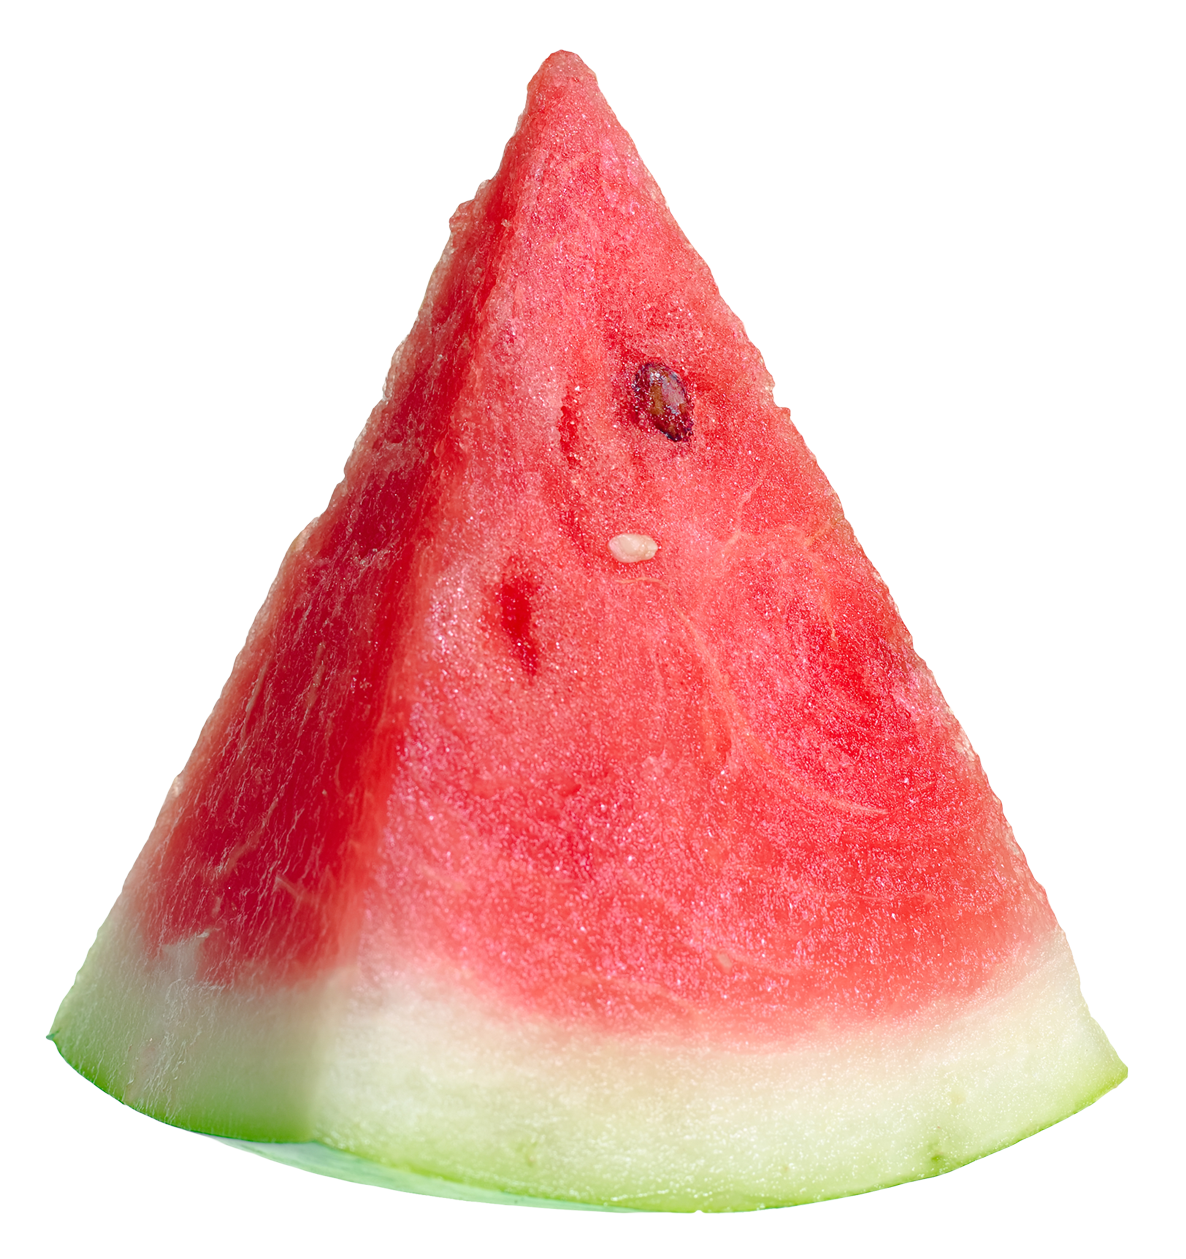 Fresh Watermelon Slice Transparent Background PNG